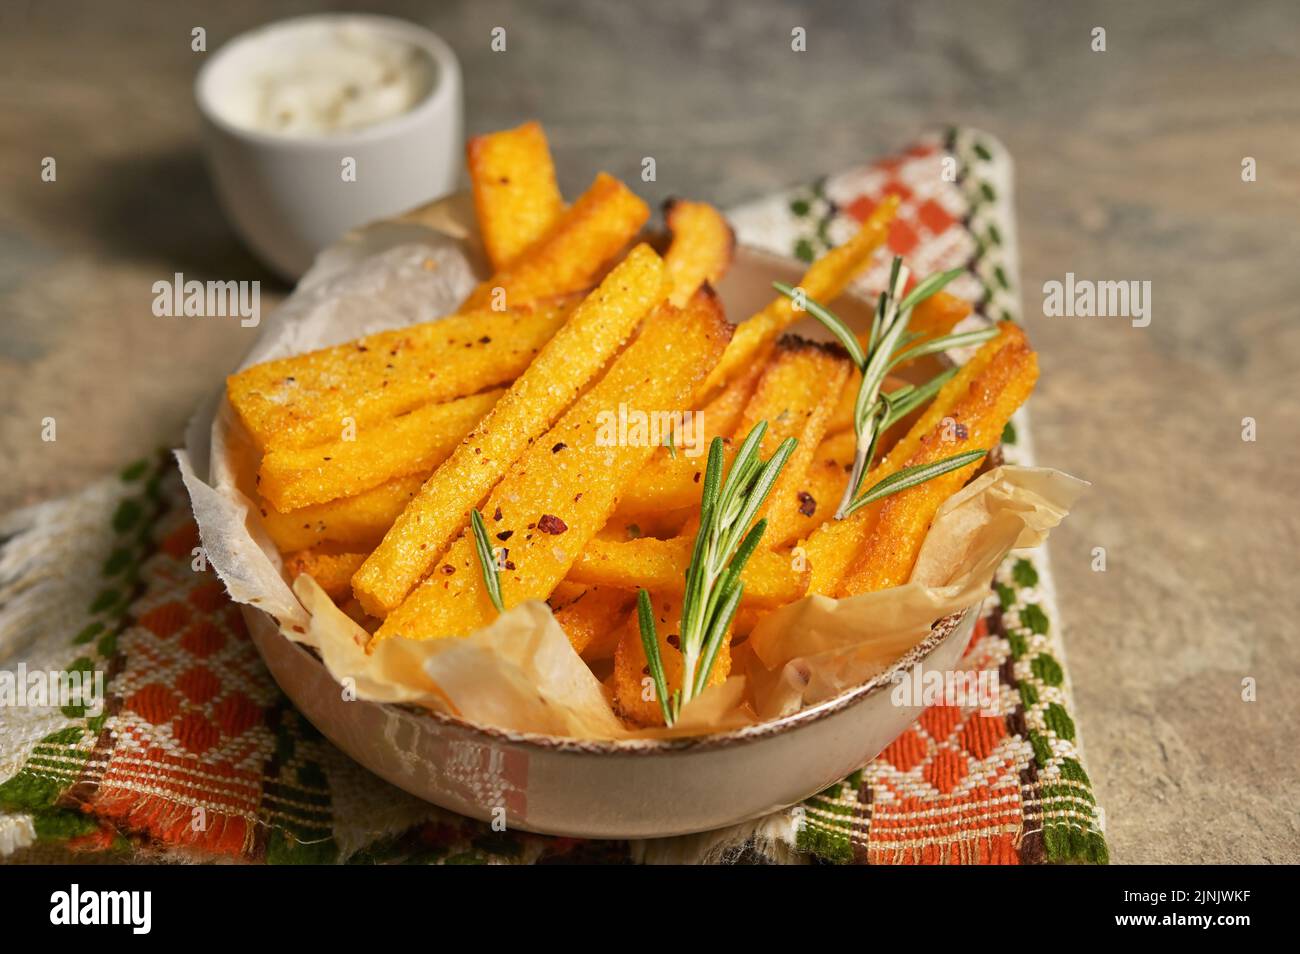 Homemade polenta fries with thyme, rosemary and yogurt sauce Stock Photo